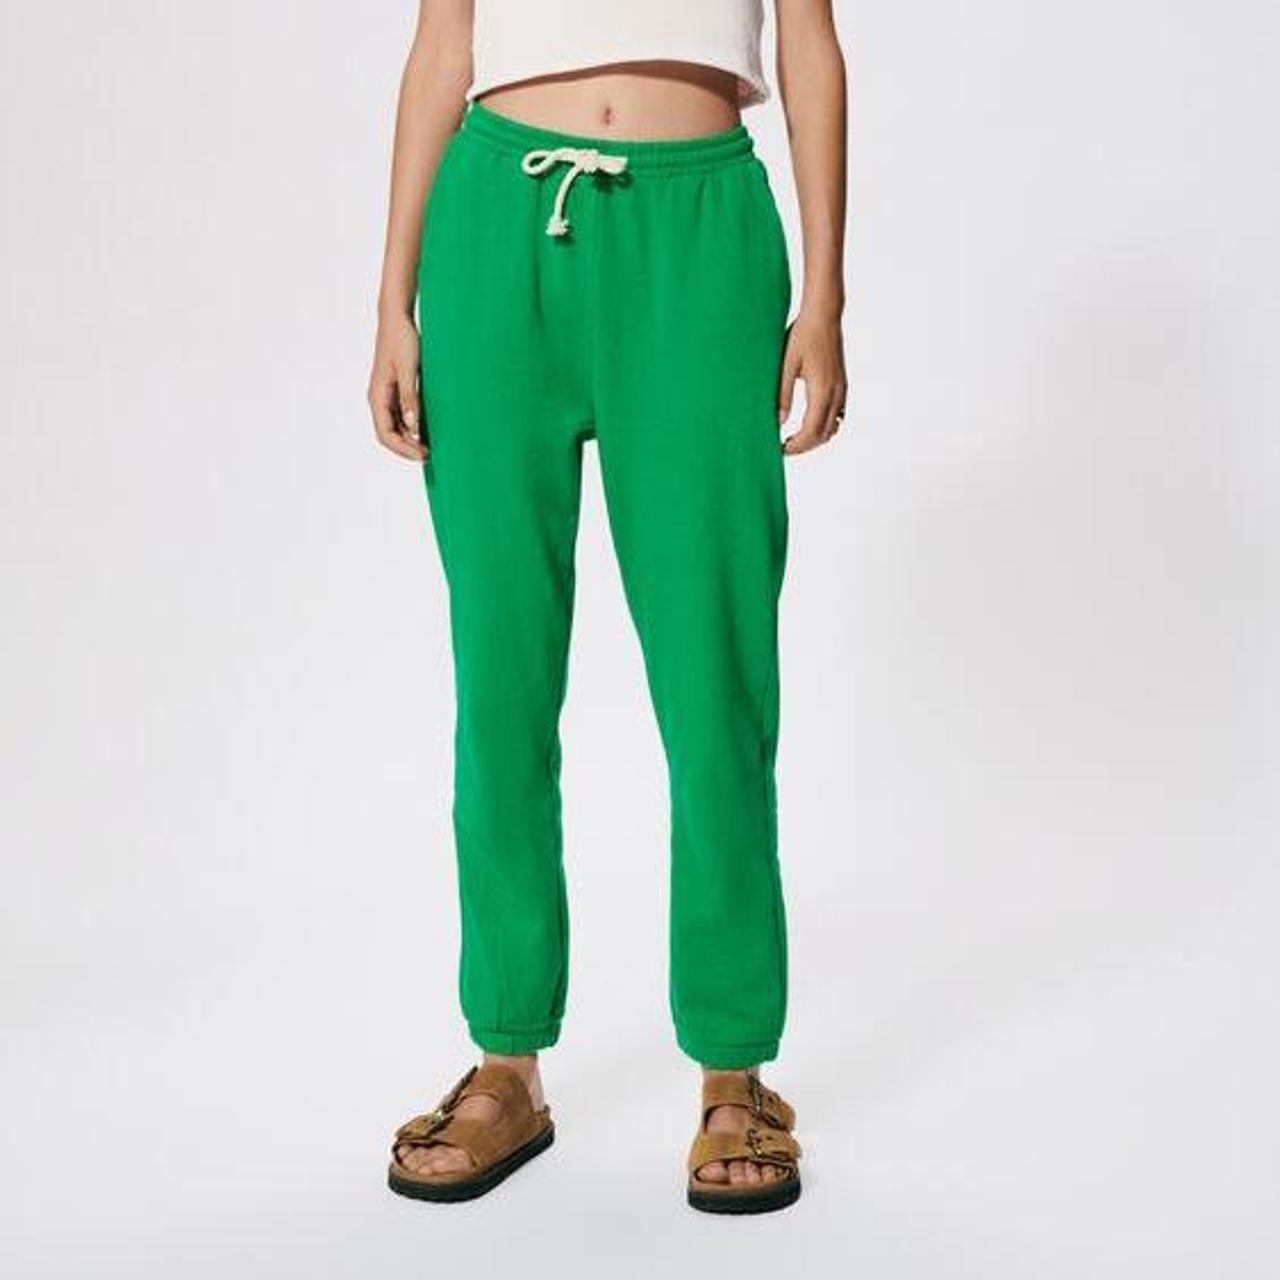 Zara Women's Green Joggers-tracksuits | Depop